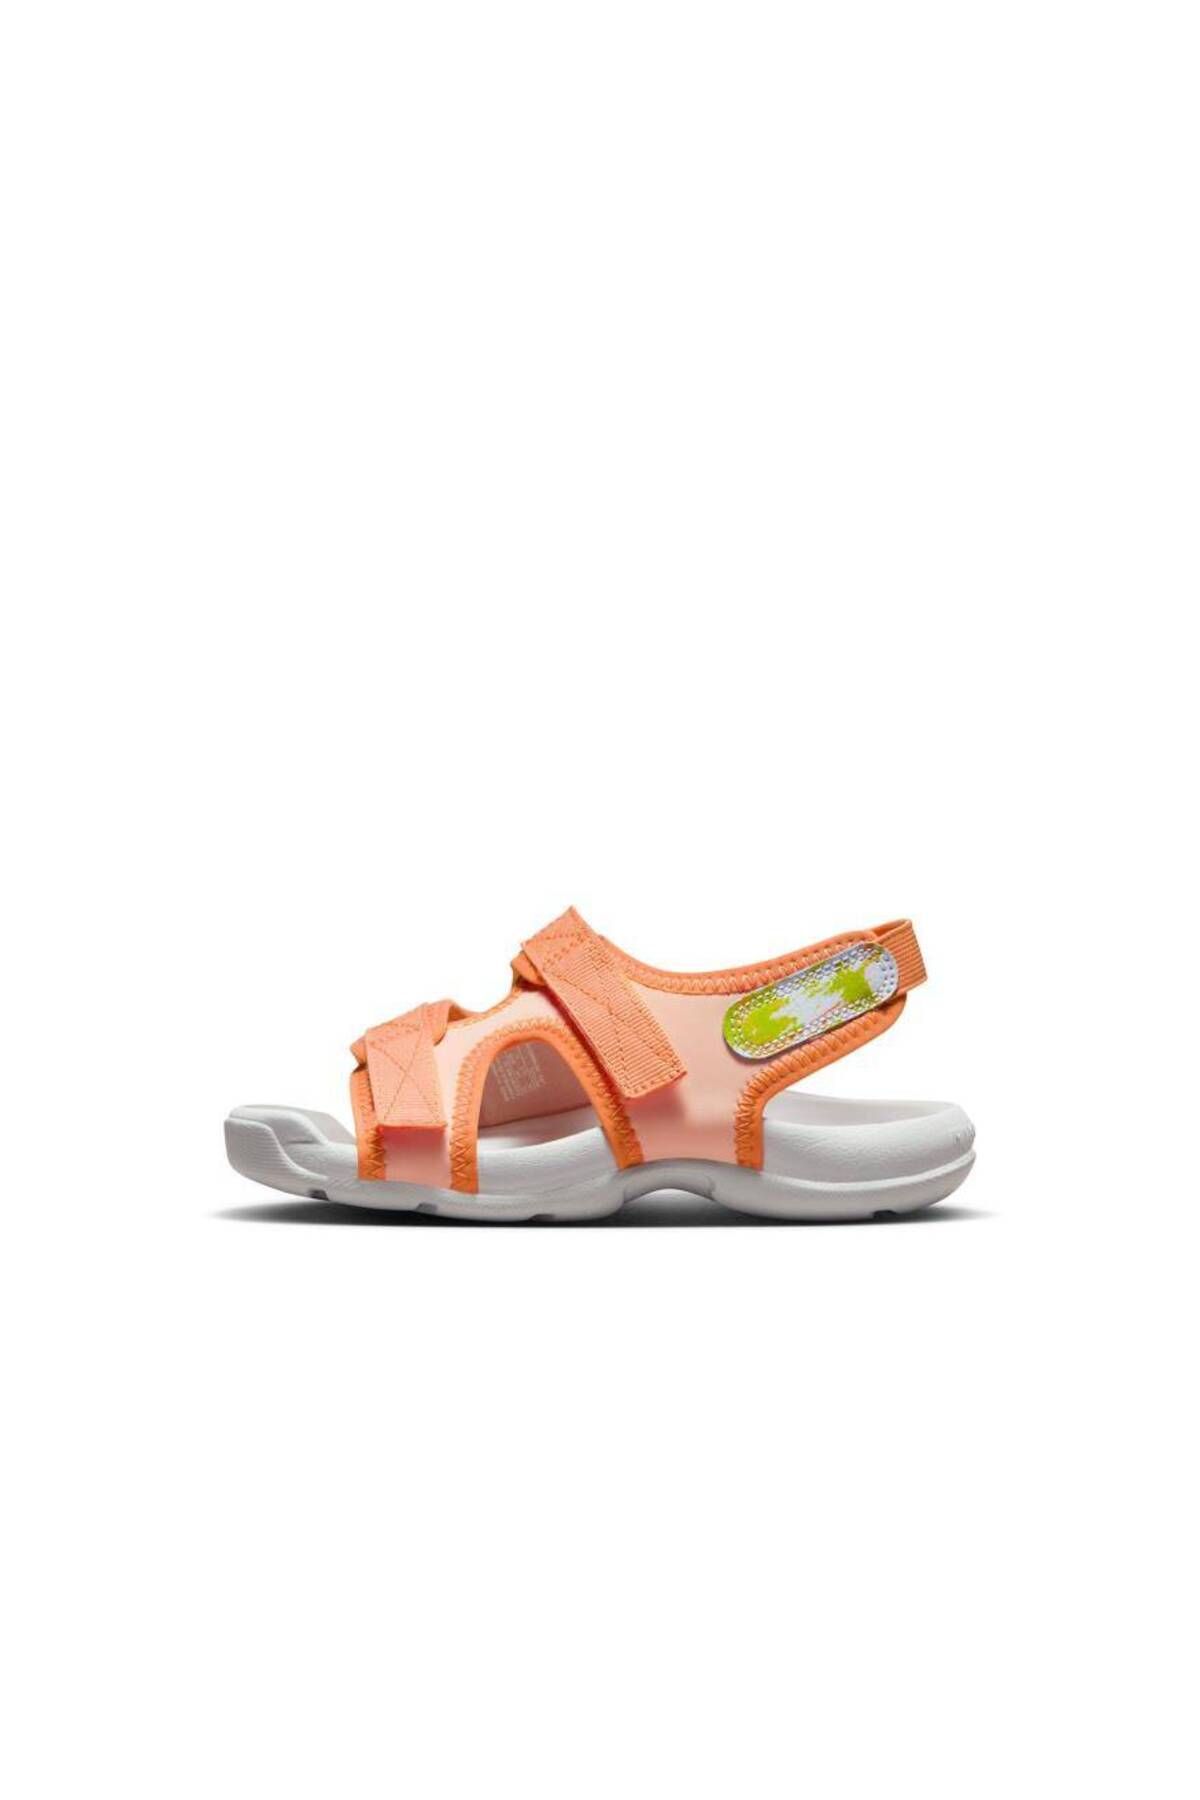 Nike Sunray Adjust 6 SE Ps Çocuk Sandalet DX6385-800